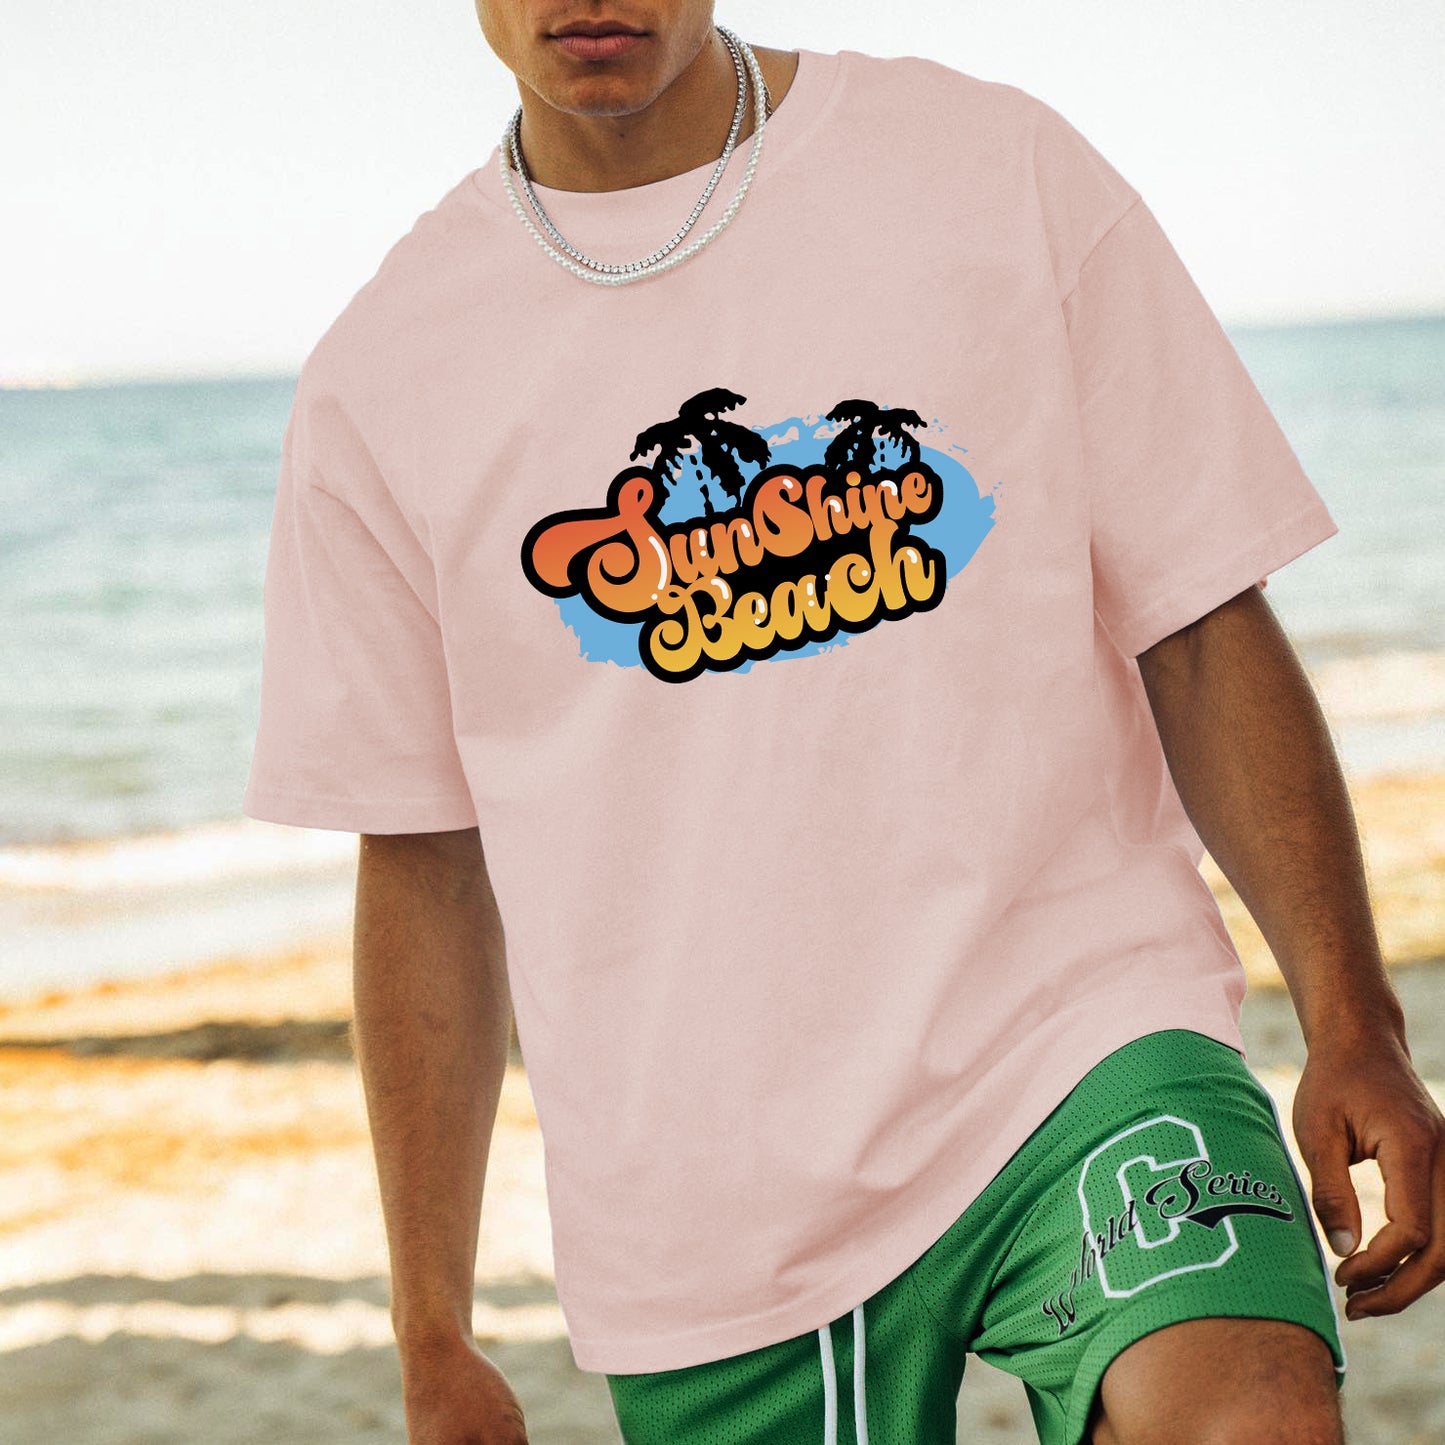 NOVAROPA™ Sunshine Beach Print Cotton T-shirt